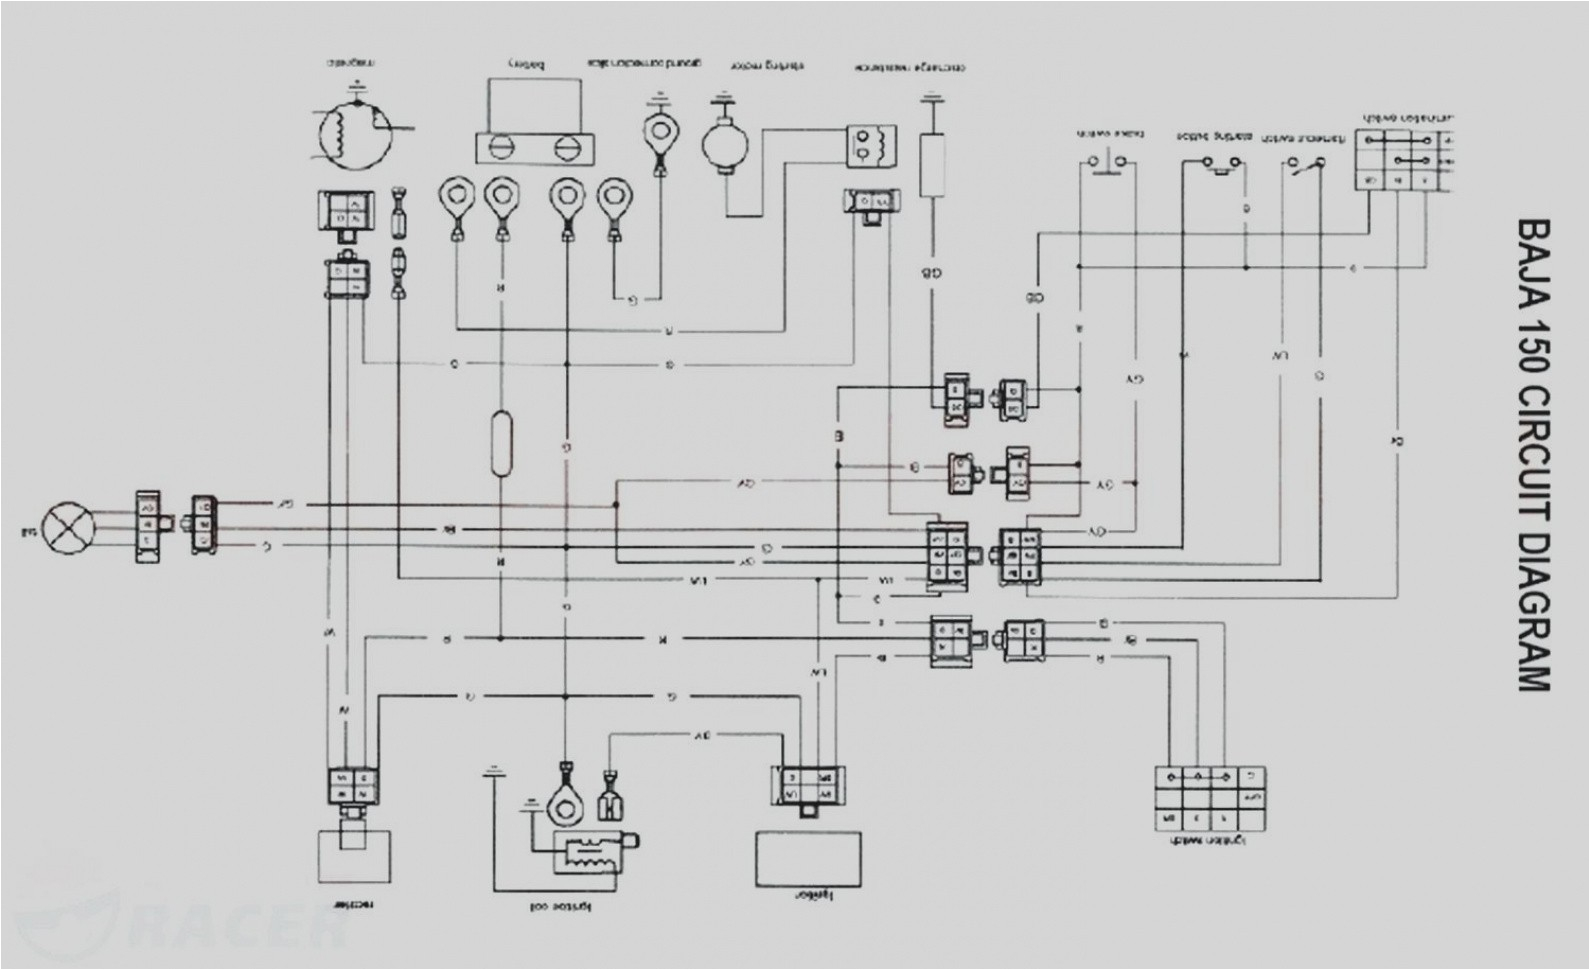 150cc atv wiring diagram wiring diagram blog 150cc atv wiring diagram circuit